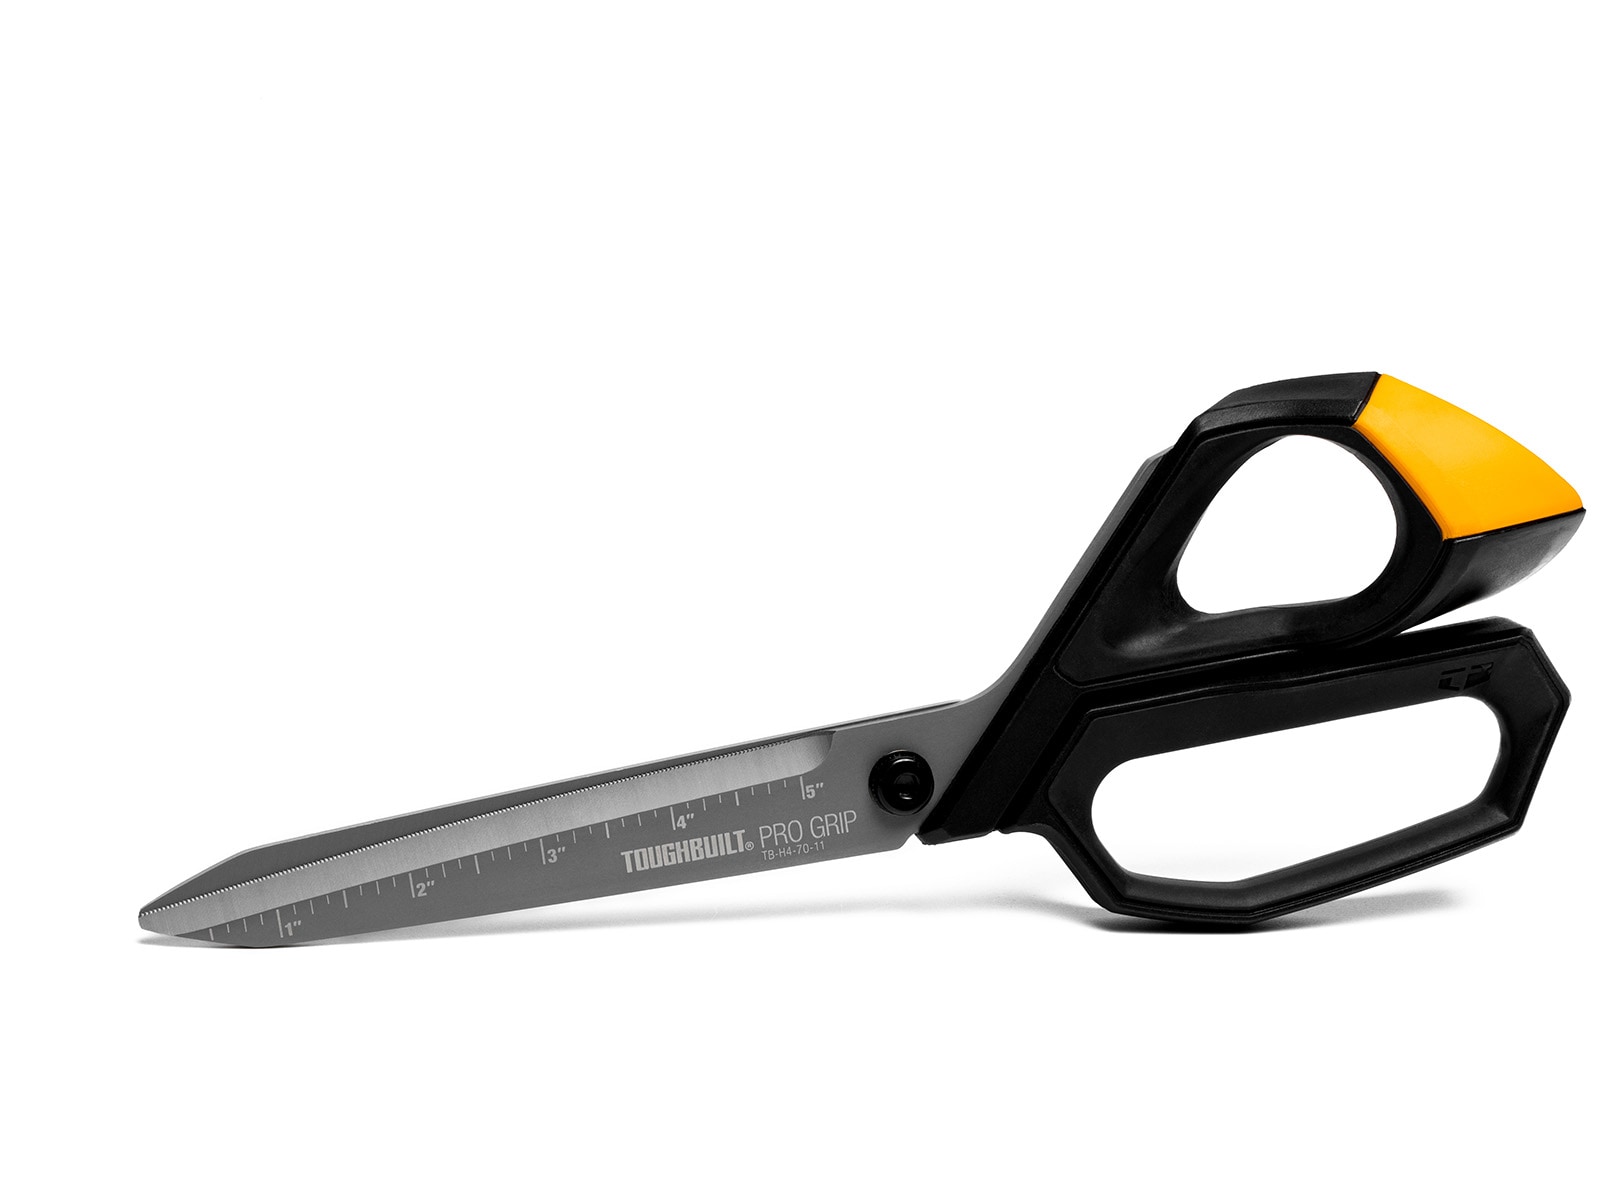 Scissors 12 inch-Professional Super Heavy Duty Industrial Scissors